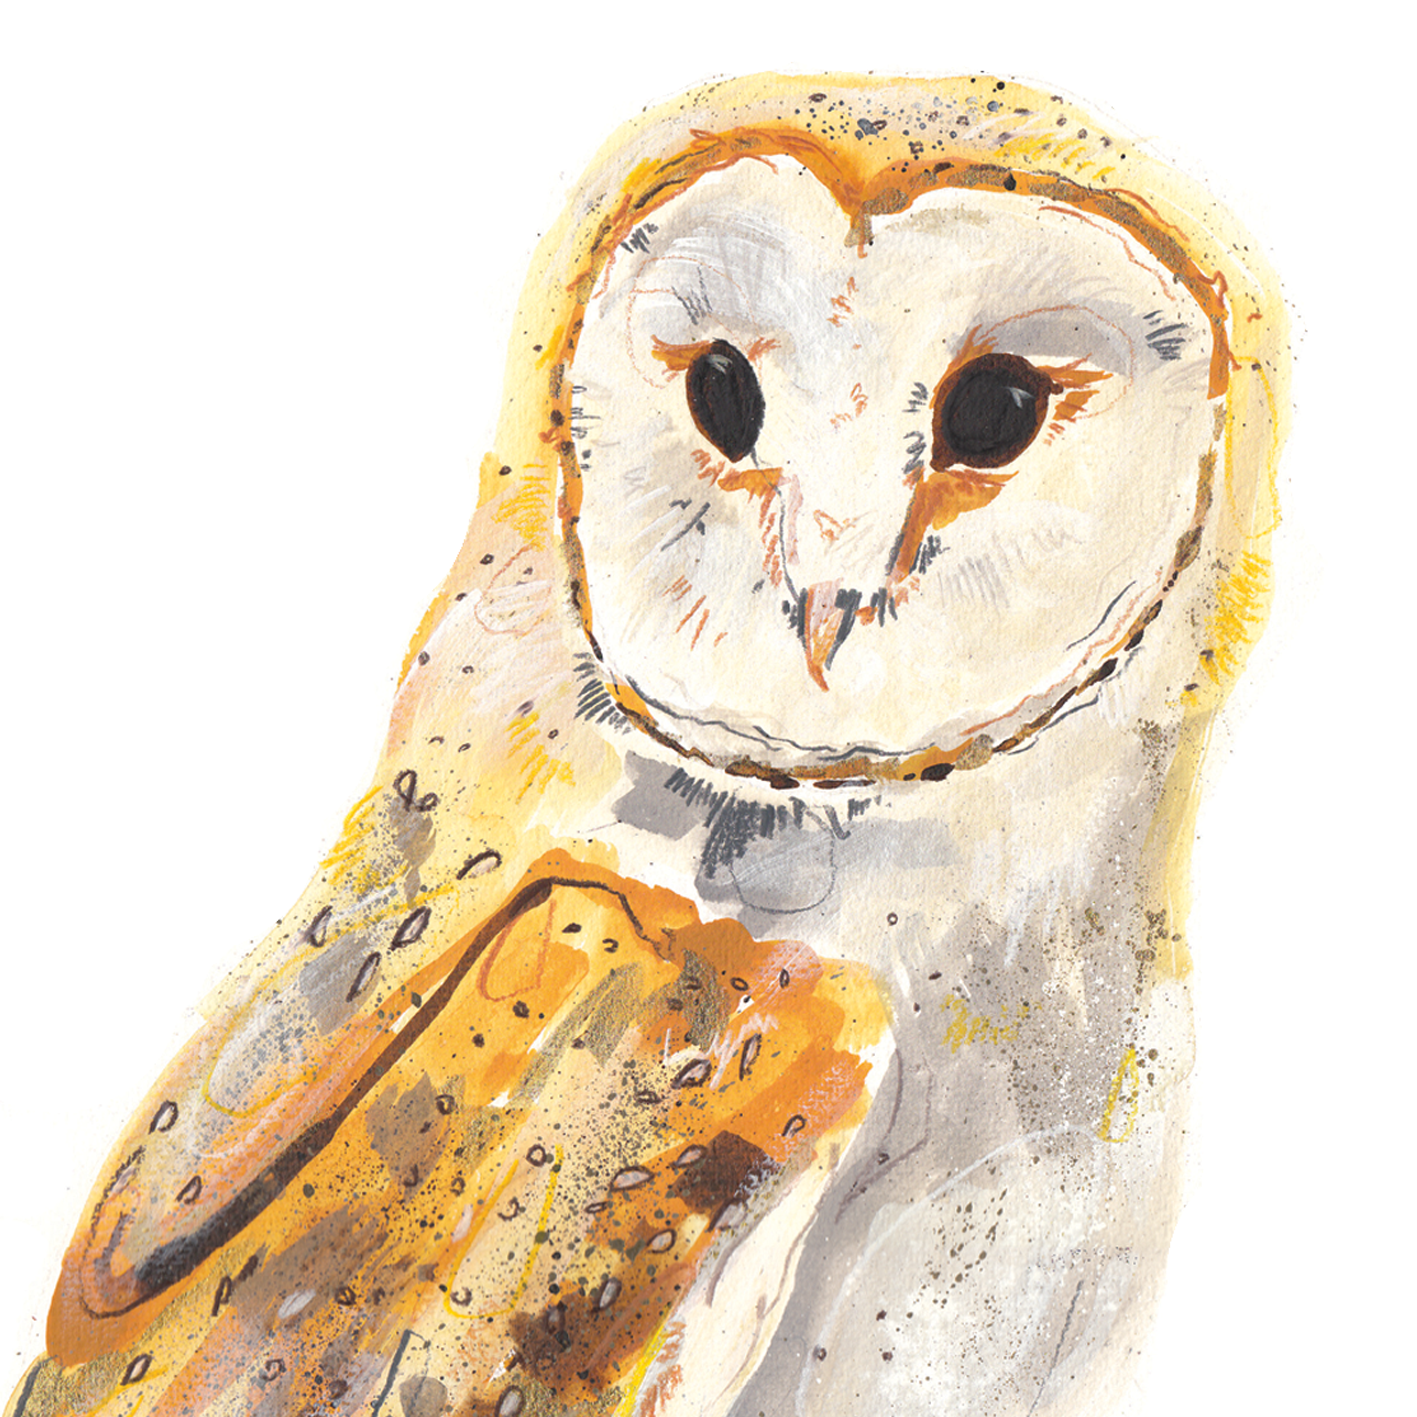 Barn Owl A4 Digital Print by Abby Cook - ad&i